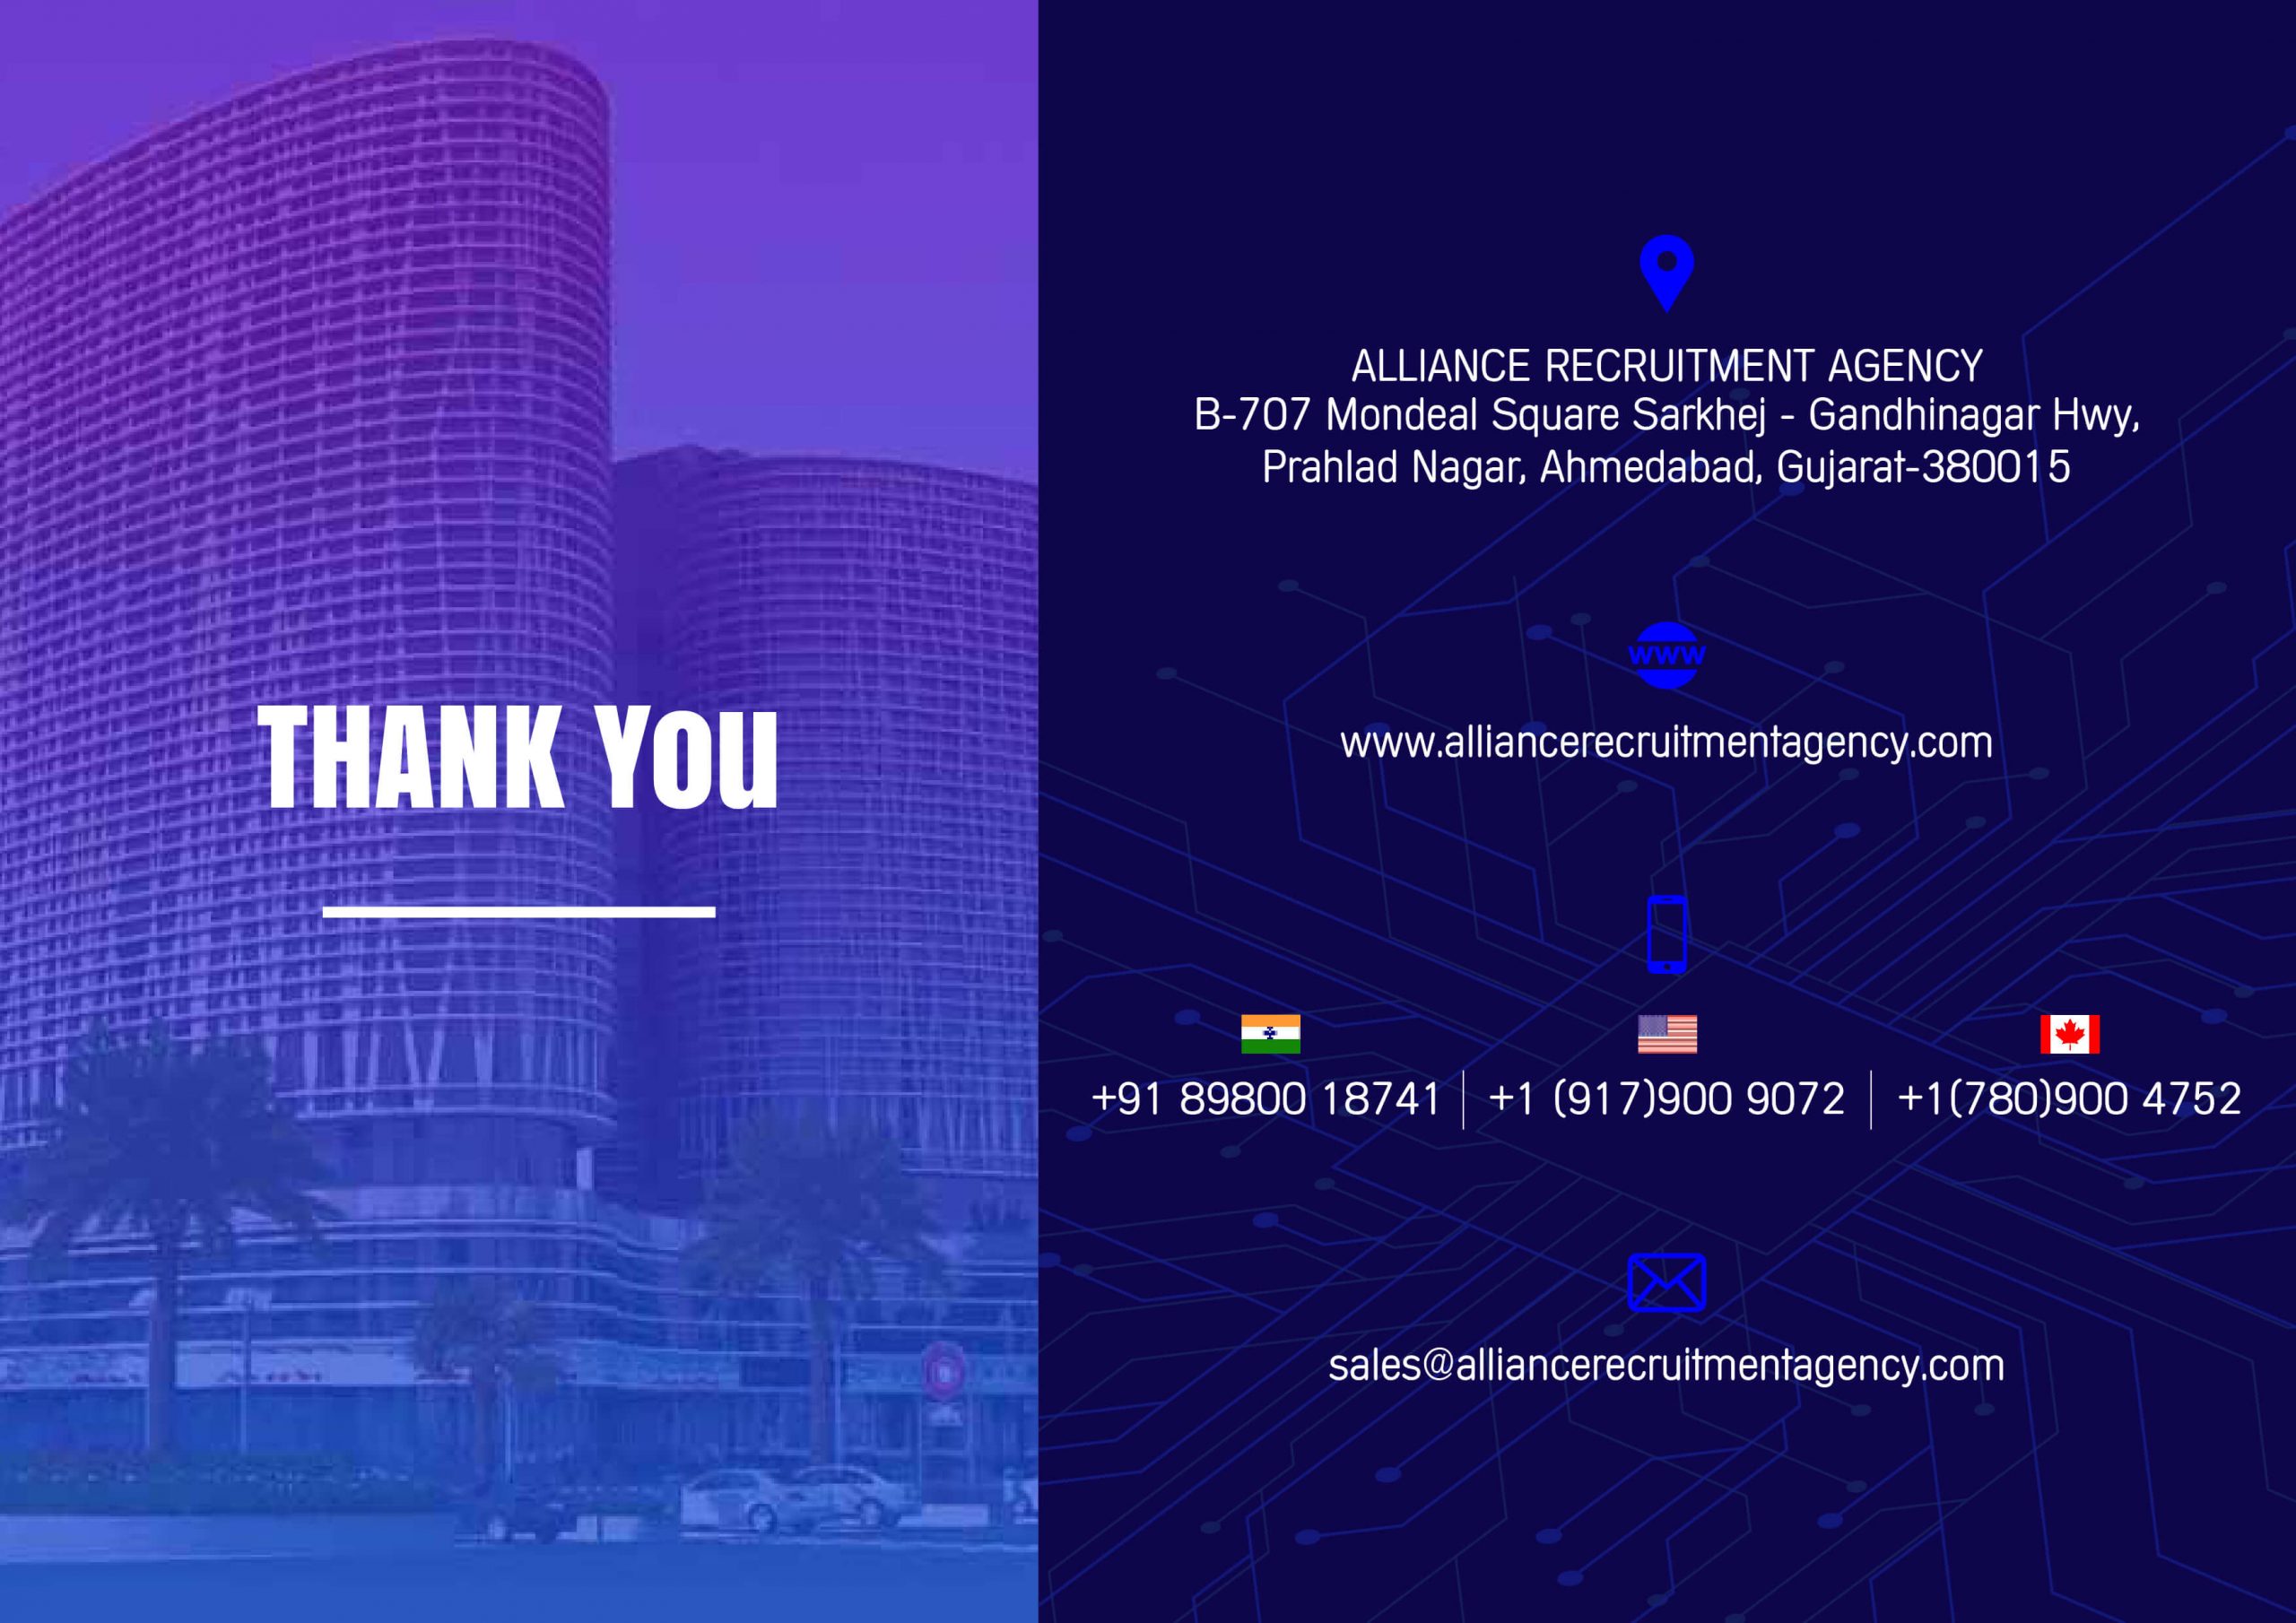 Thank You - Alliance Recruitment